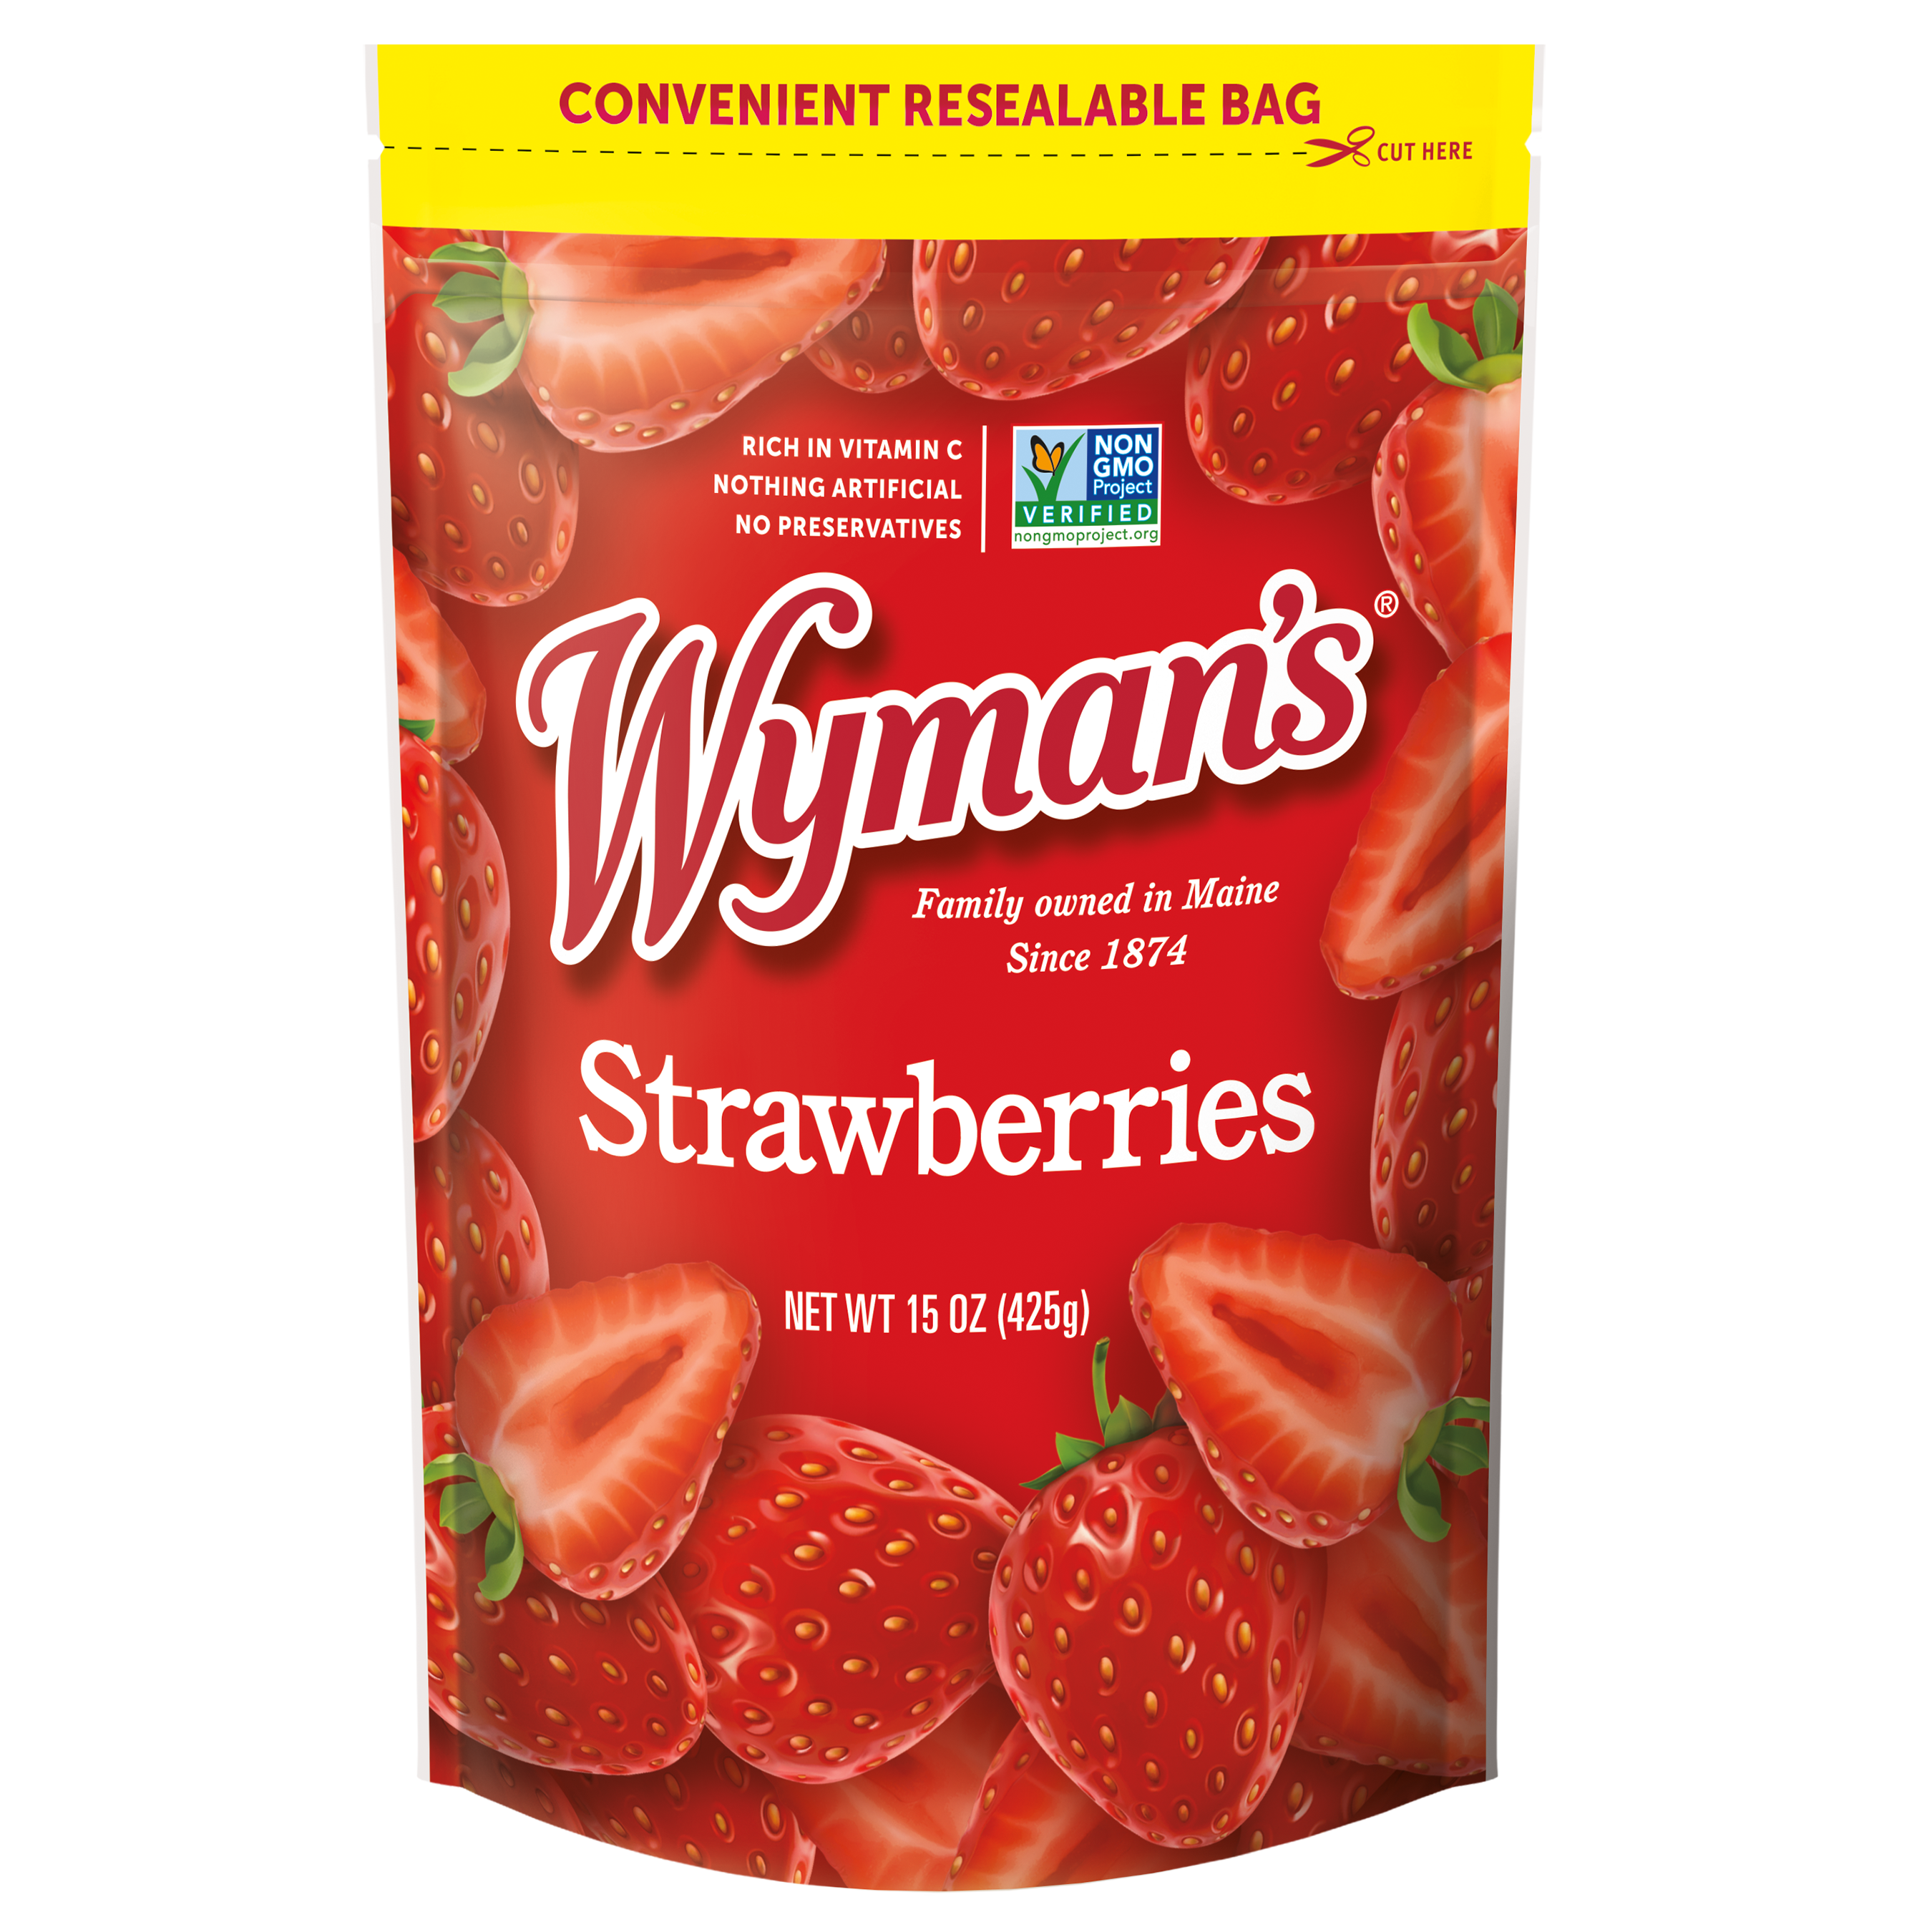 A bag of PSS fresh-frozen strawberries.